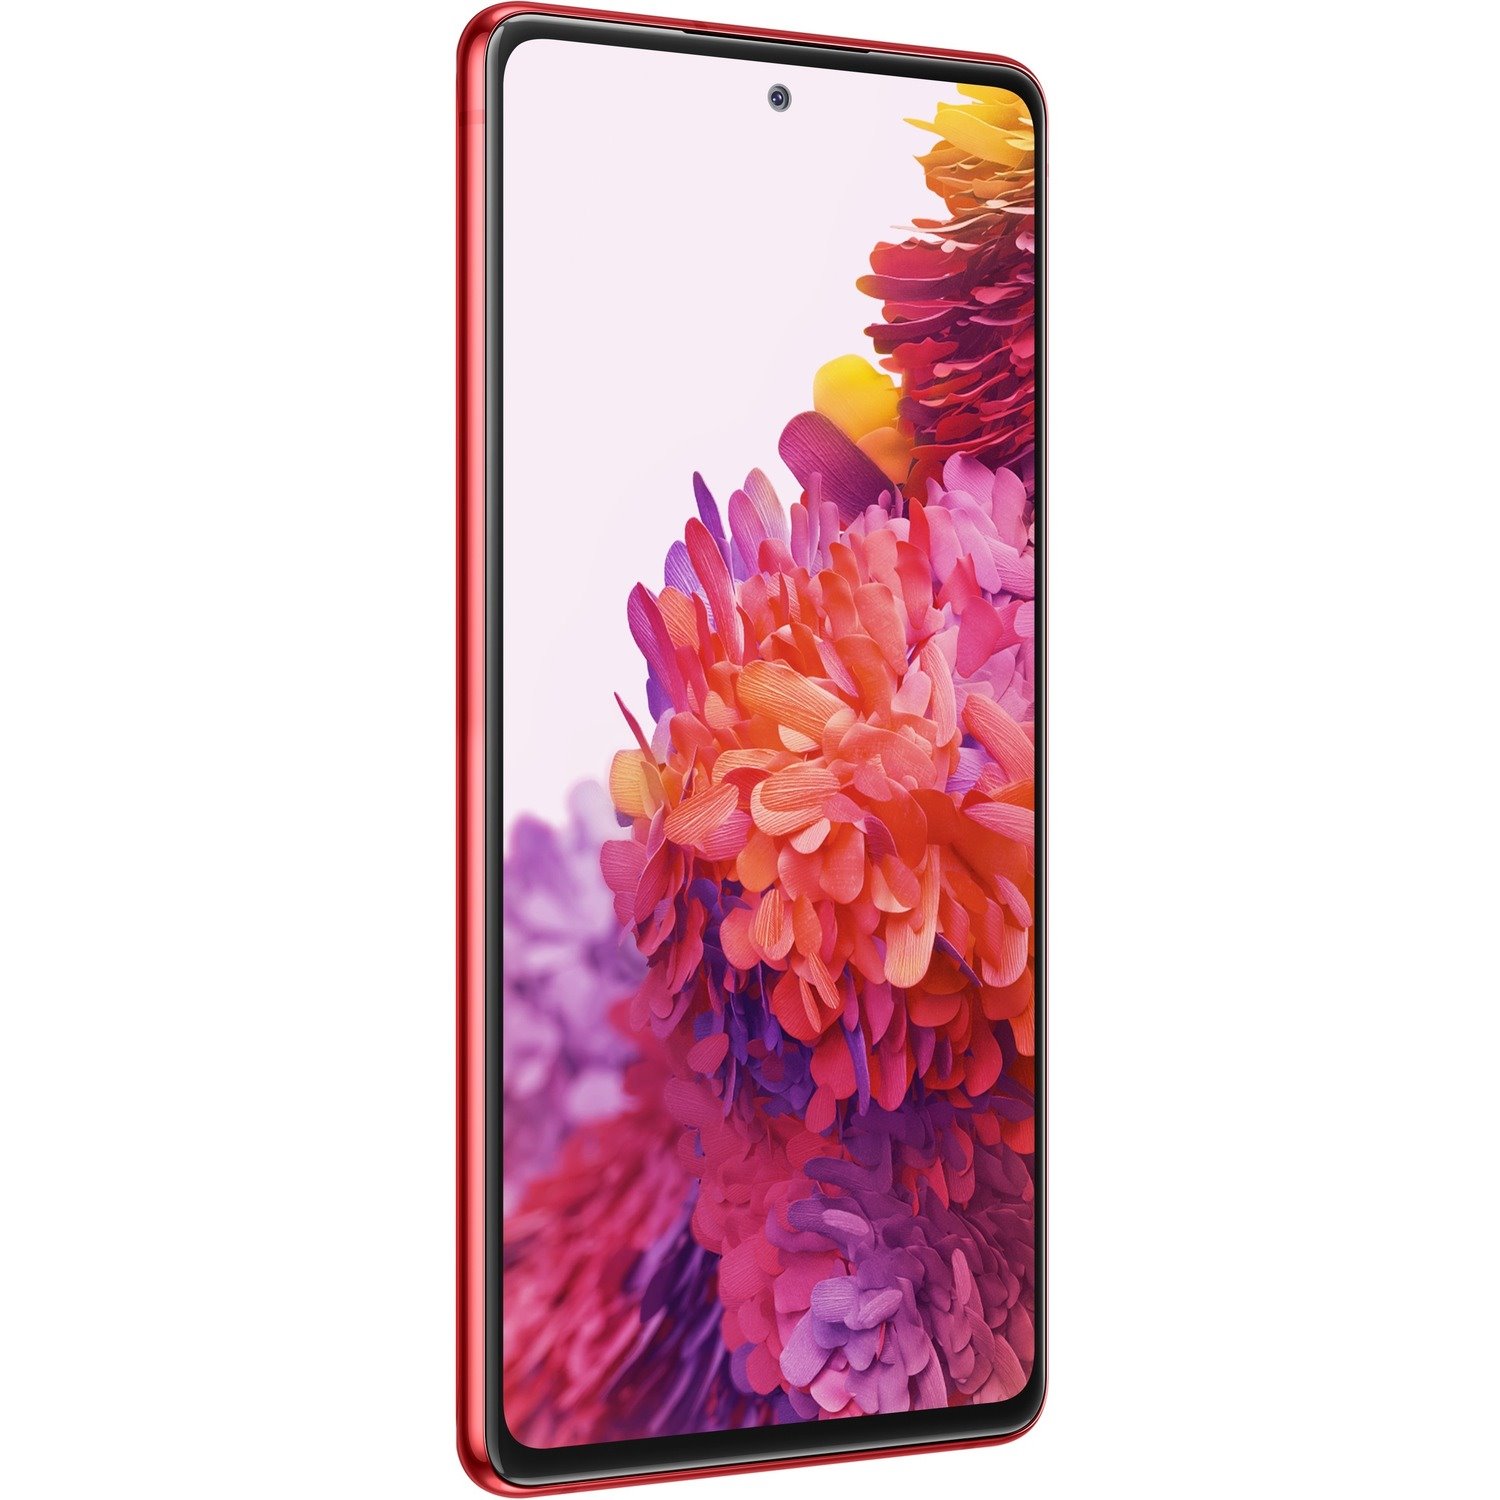 Samsung Galaxy S20 FE 5G SM-G781U 128 GB Smartphone - 6.5" Super AMOLED 1080 x 2400 - Kryo 585Single-core (1 Core) 2.84 GHz + Kryo 585 Triple-core (3 Core) 2.42 GHz + Kryo 585 Quad-core (4 Core) 1.80 GHz) - 6 GB RAM - Android 10 - 5G - Cloud Red